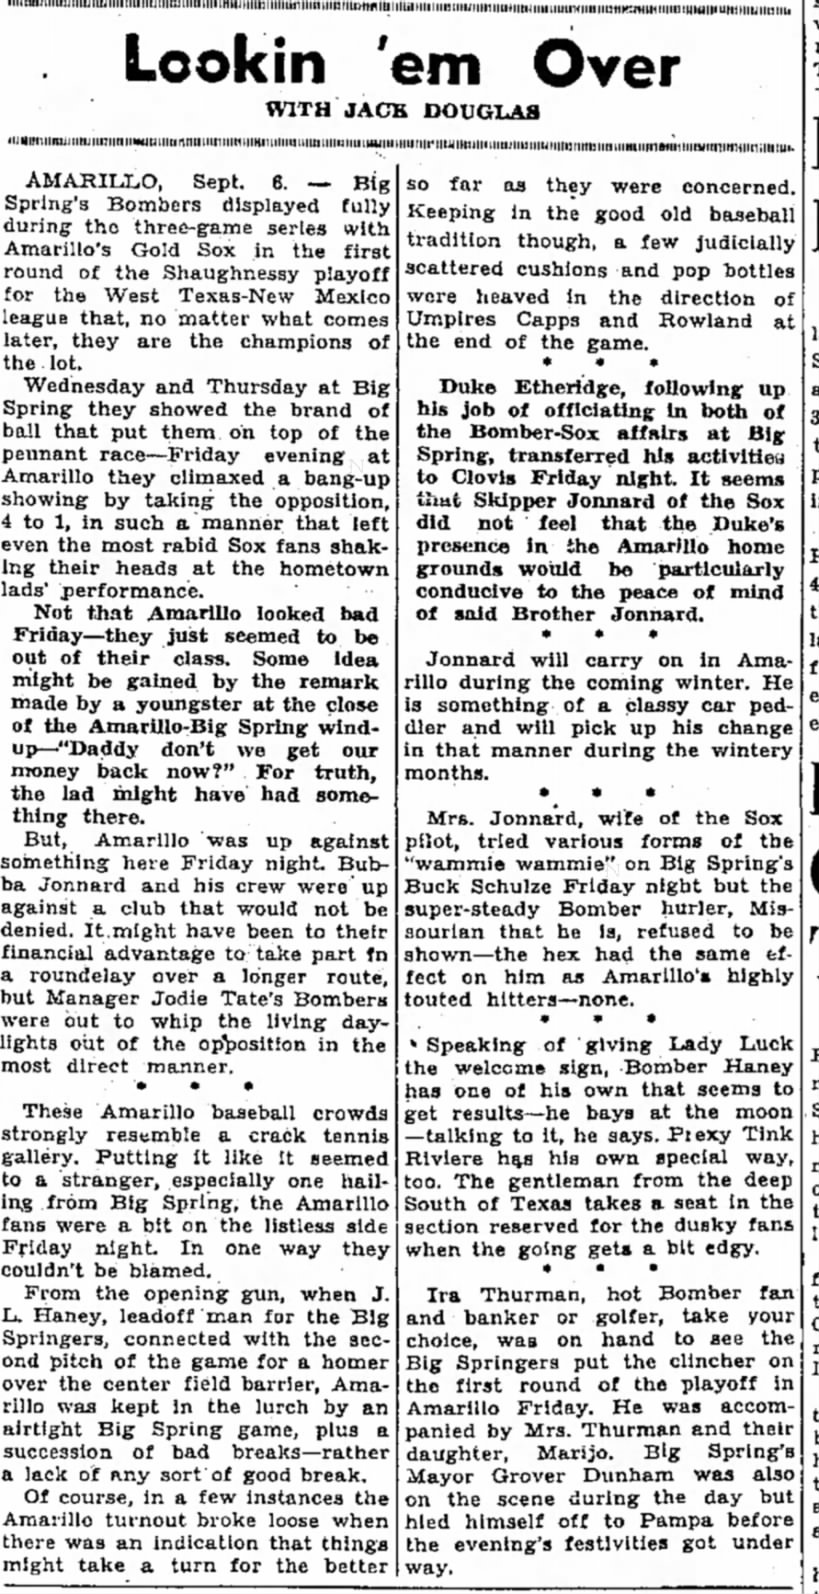 Big Spring (Texas) Daily Herald September 7 1941